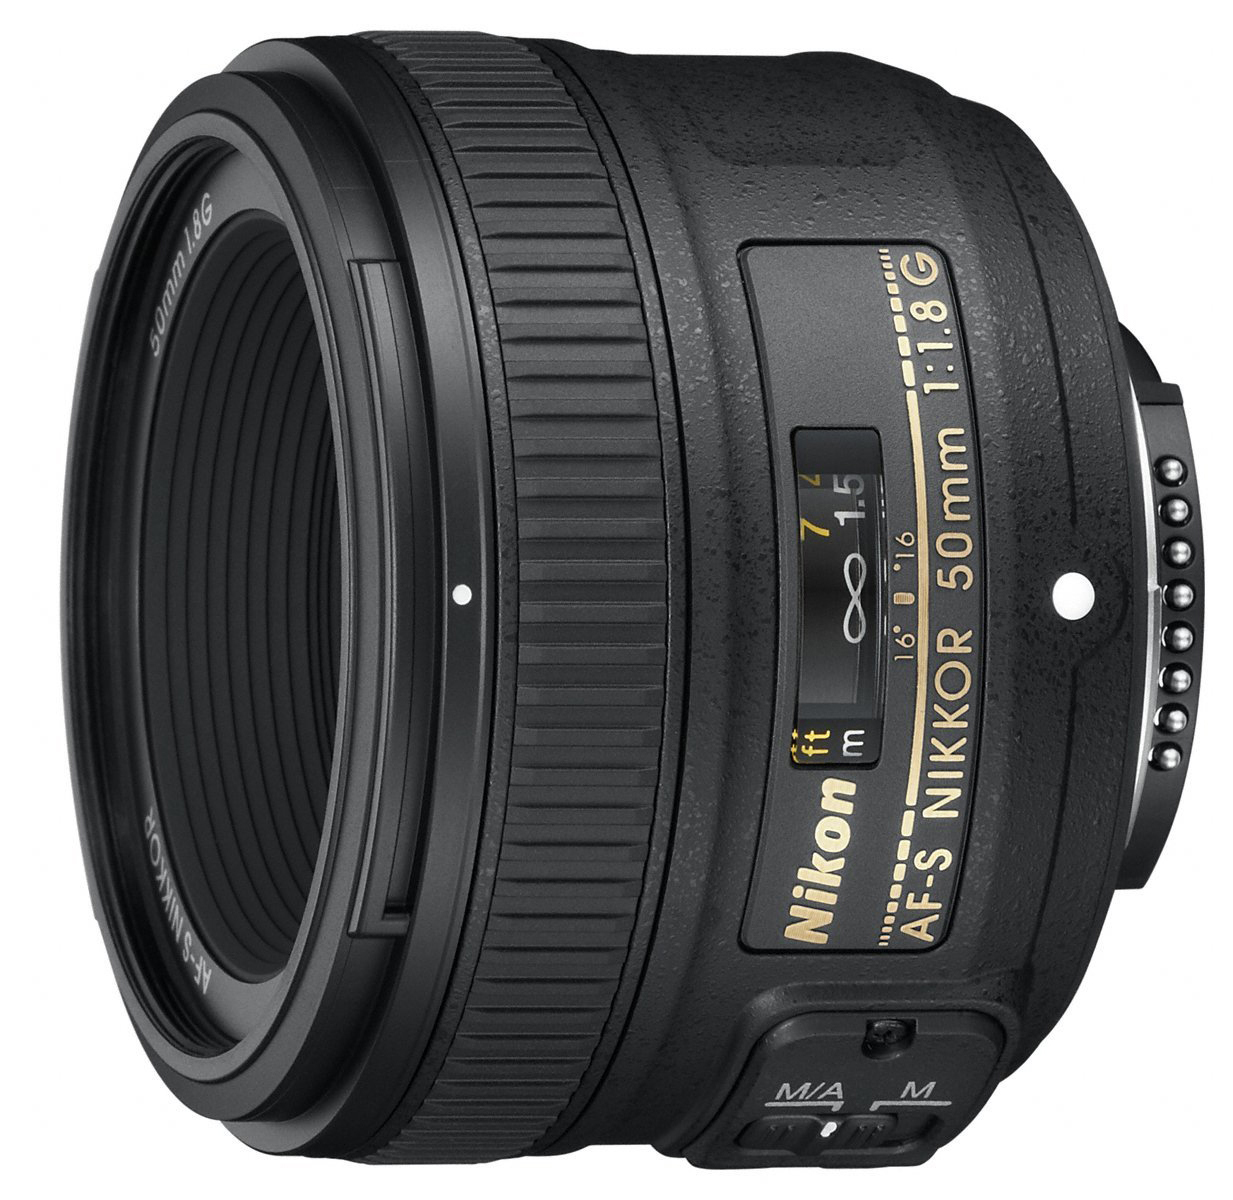 Nikon 50mm f1.8 lens